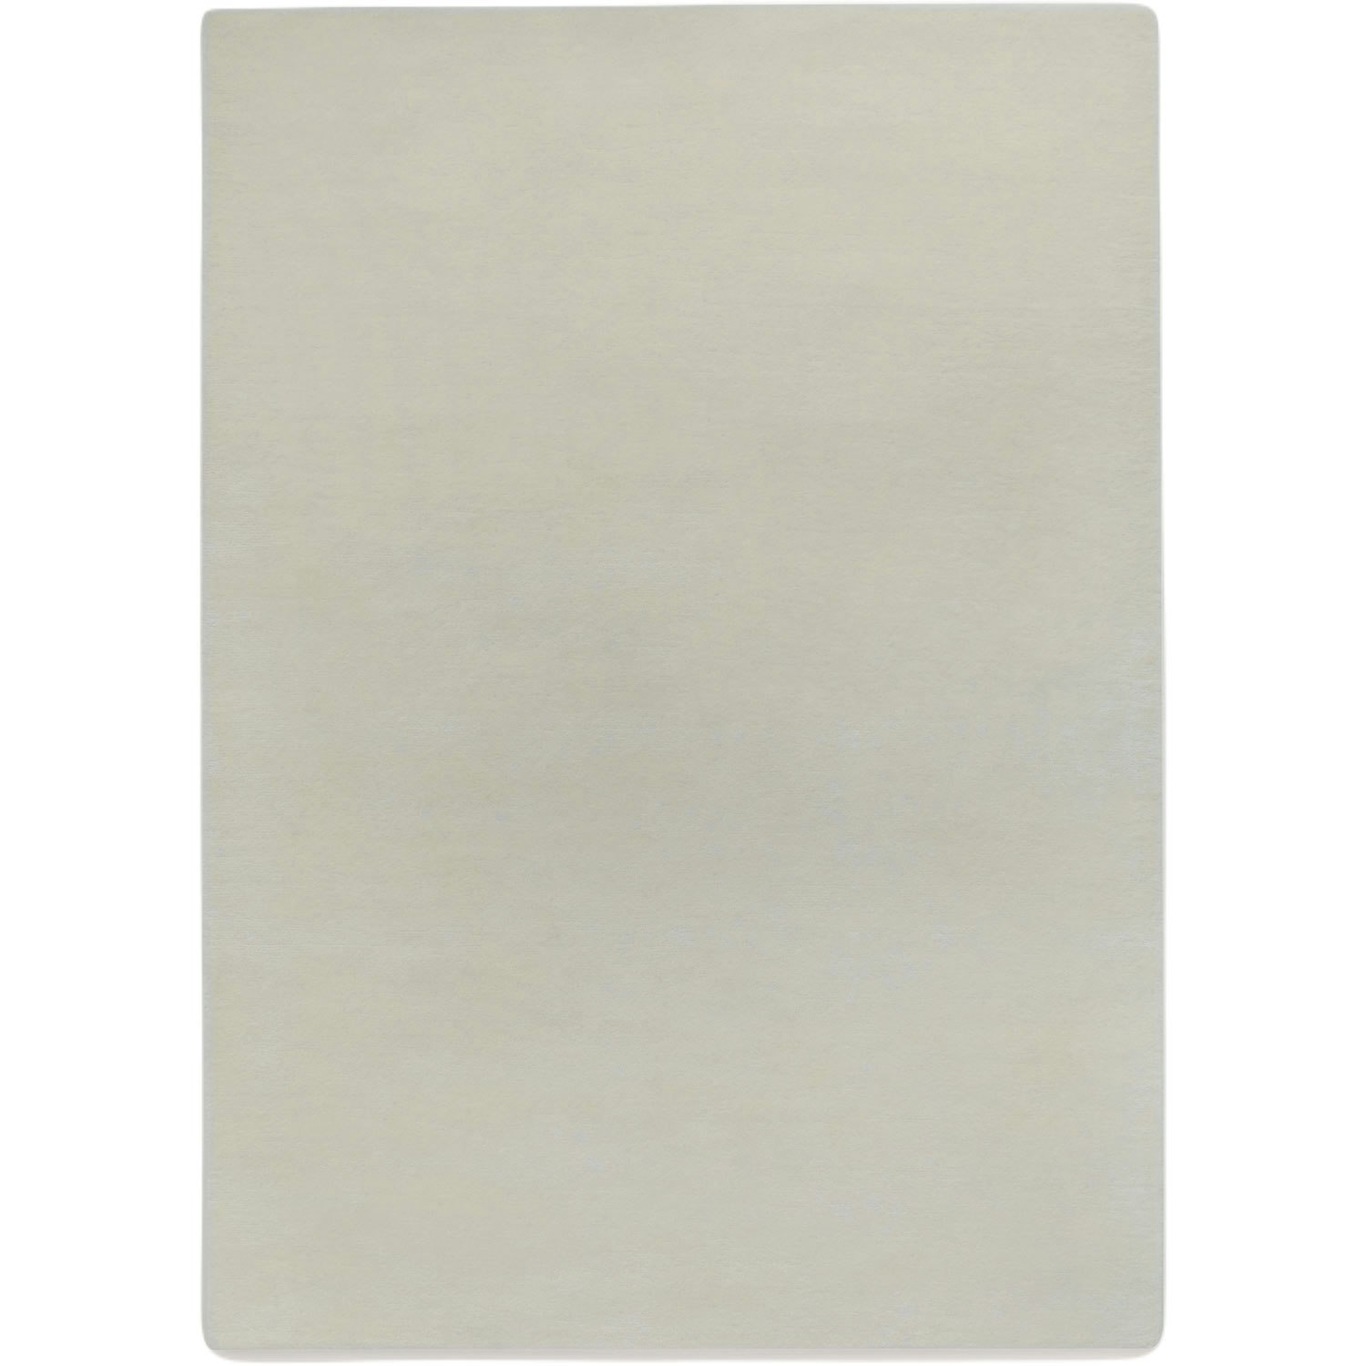 Liljehok Uldgulvtæppe Offwhite, 170x240 cm